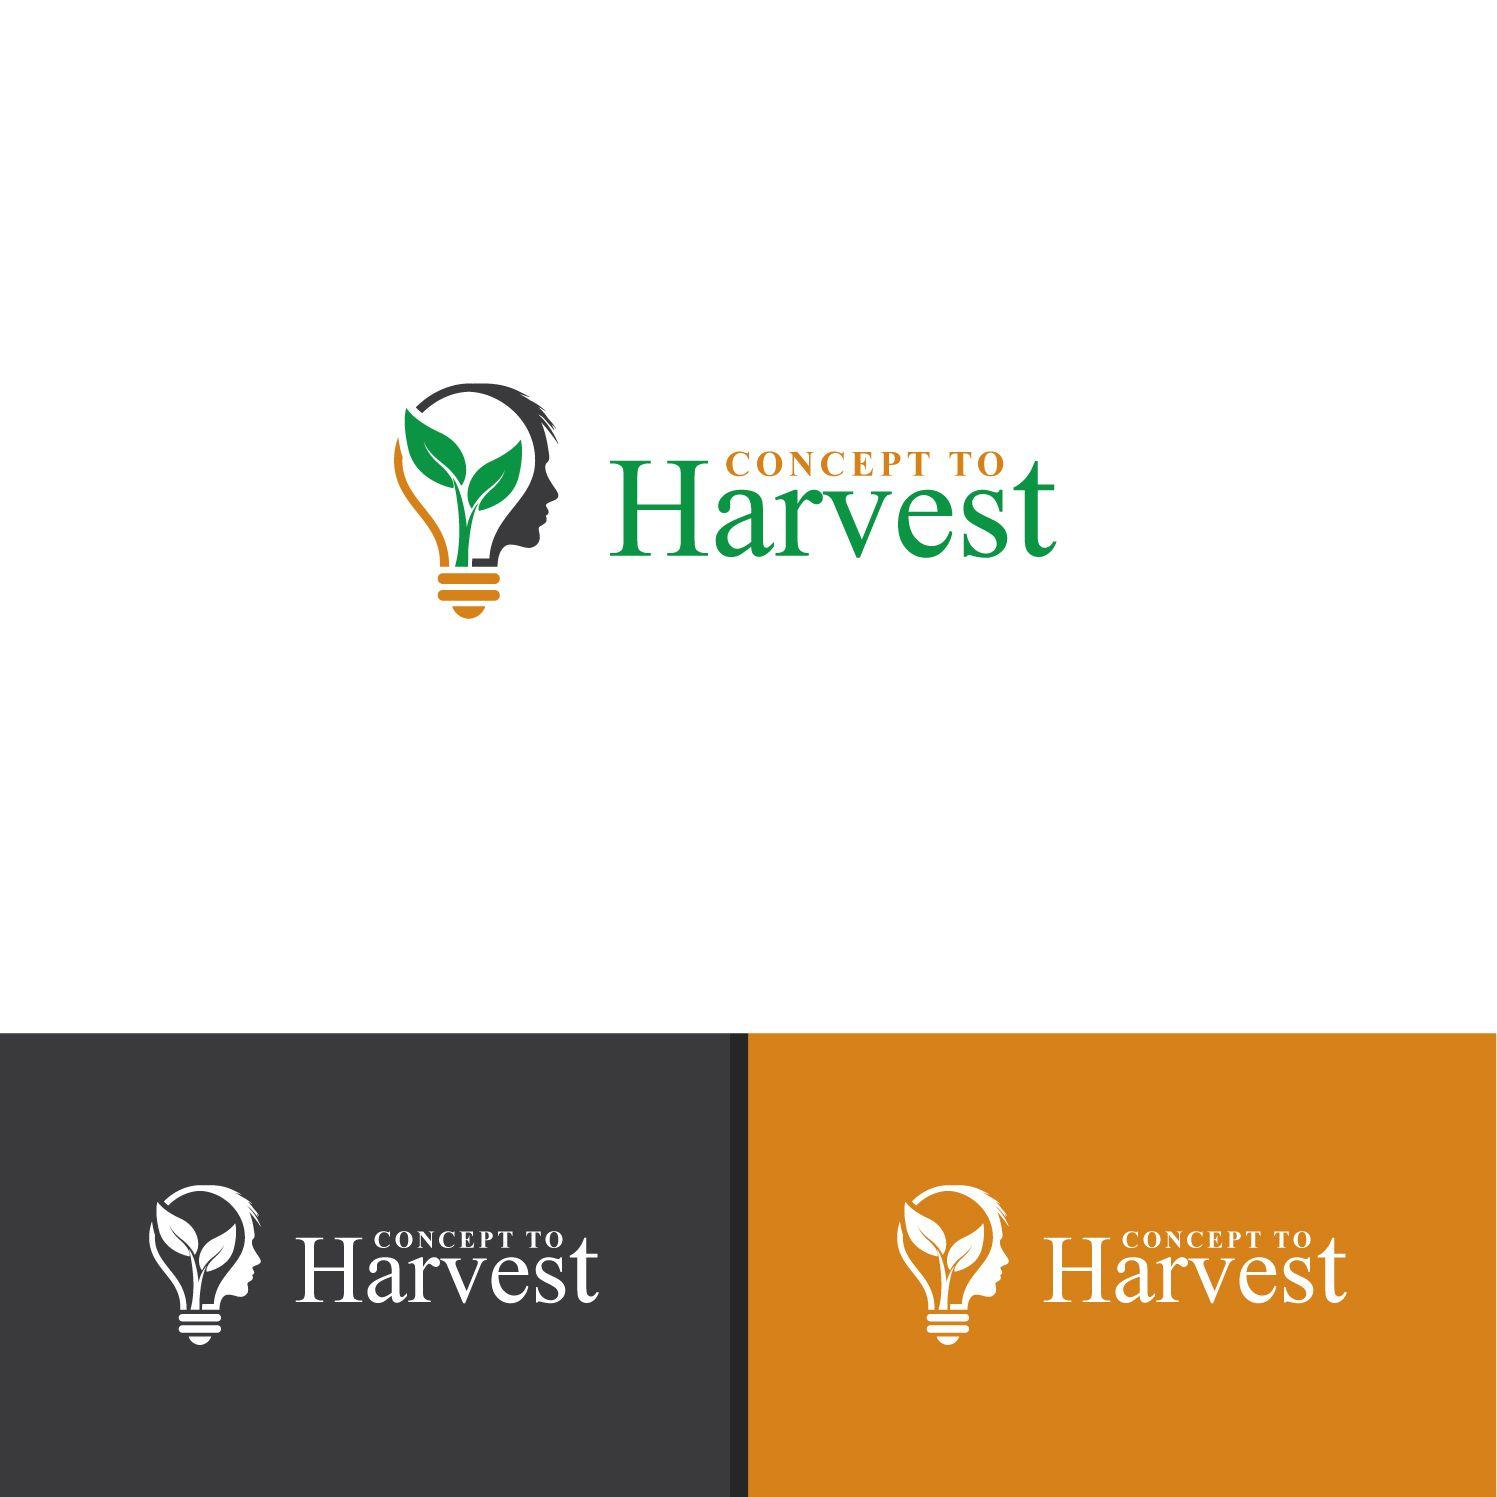 Harvest Company Logo - Upmarket, Serious, It Company Logo Design for Concept to Harvest